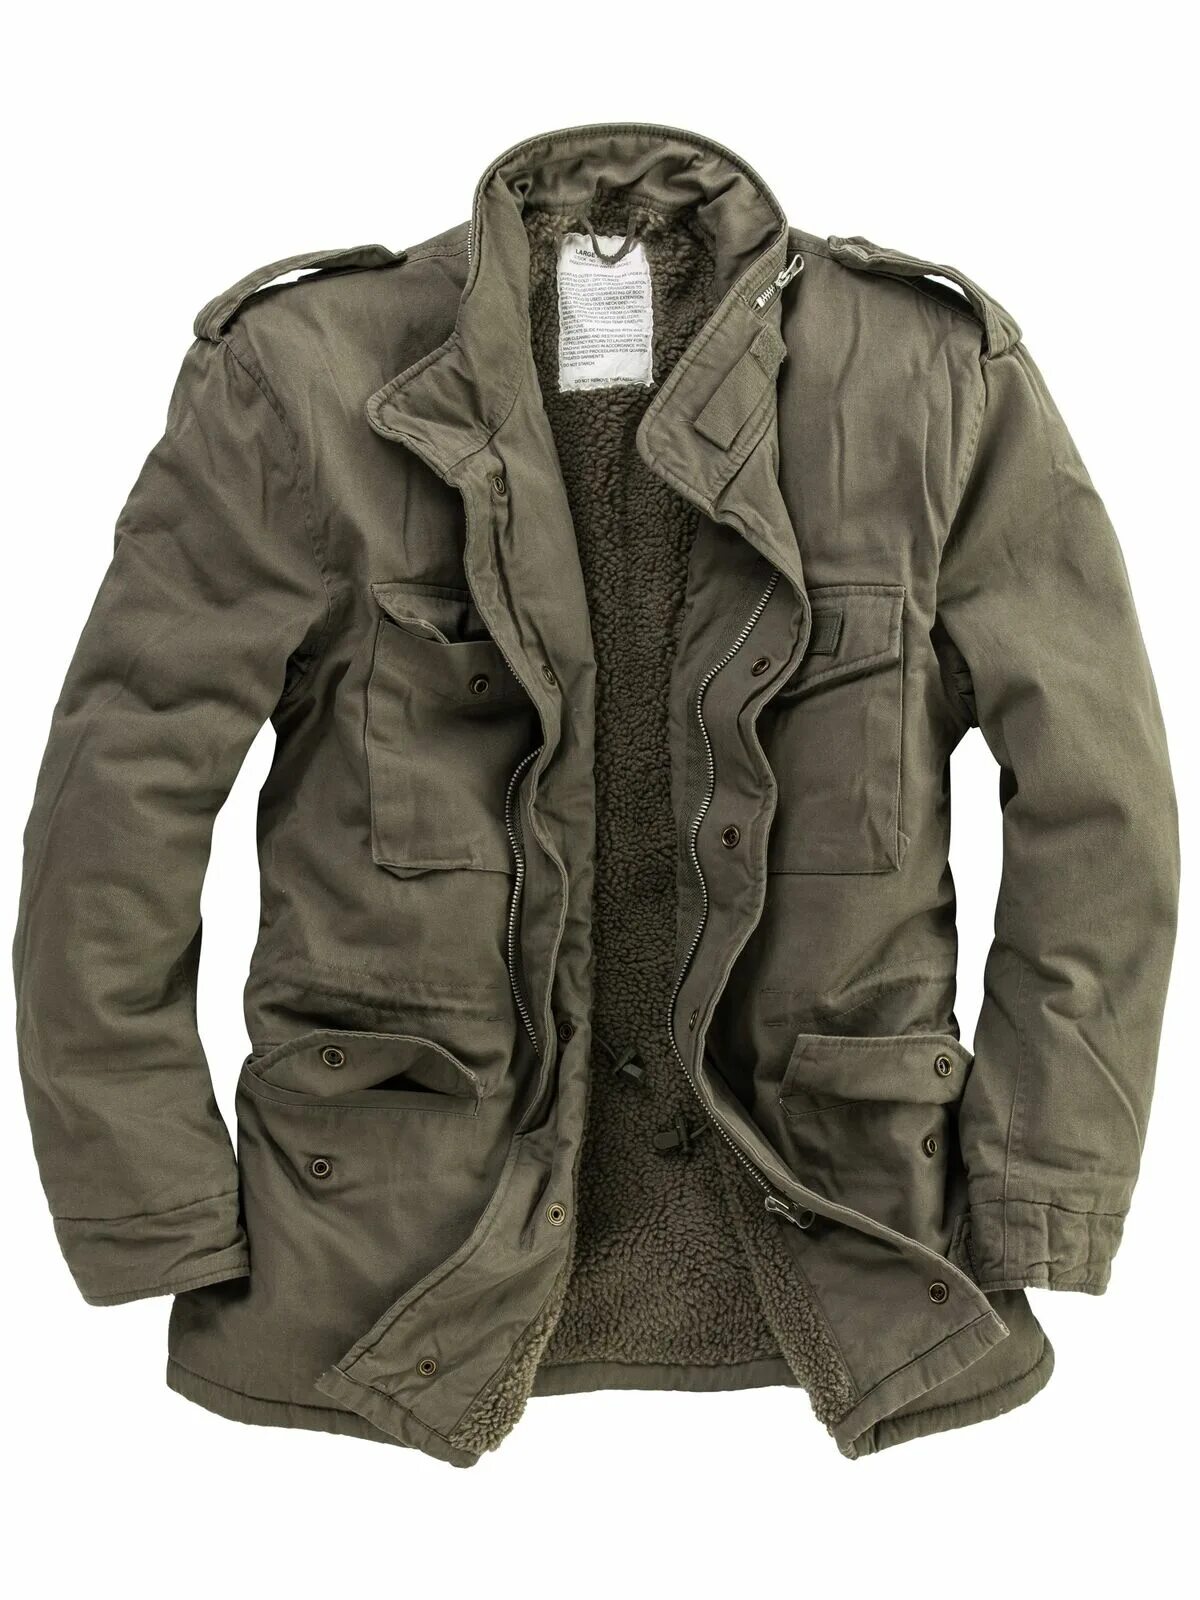 Милитари мужские. Куртка Surplus Paratrooper Winter Jacket. M-65 Classic Brandit Olive. Brandit m65 зимняя. Куртка m-65 Surplus.